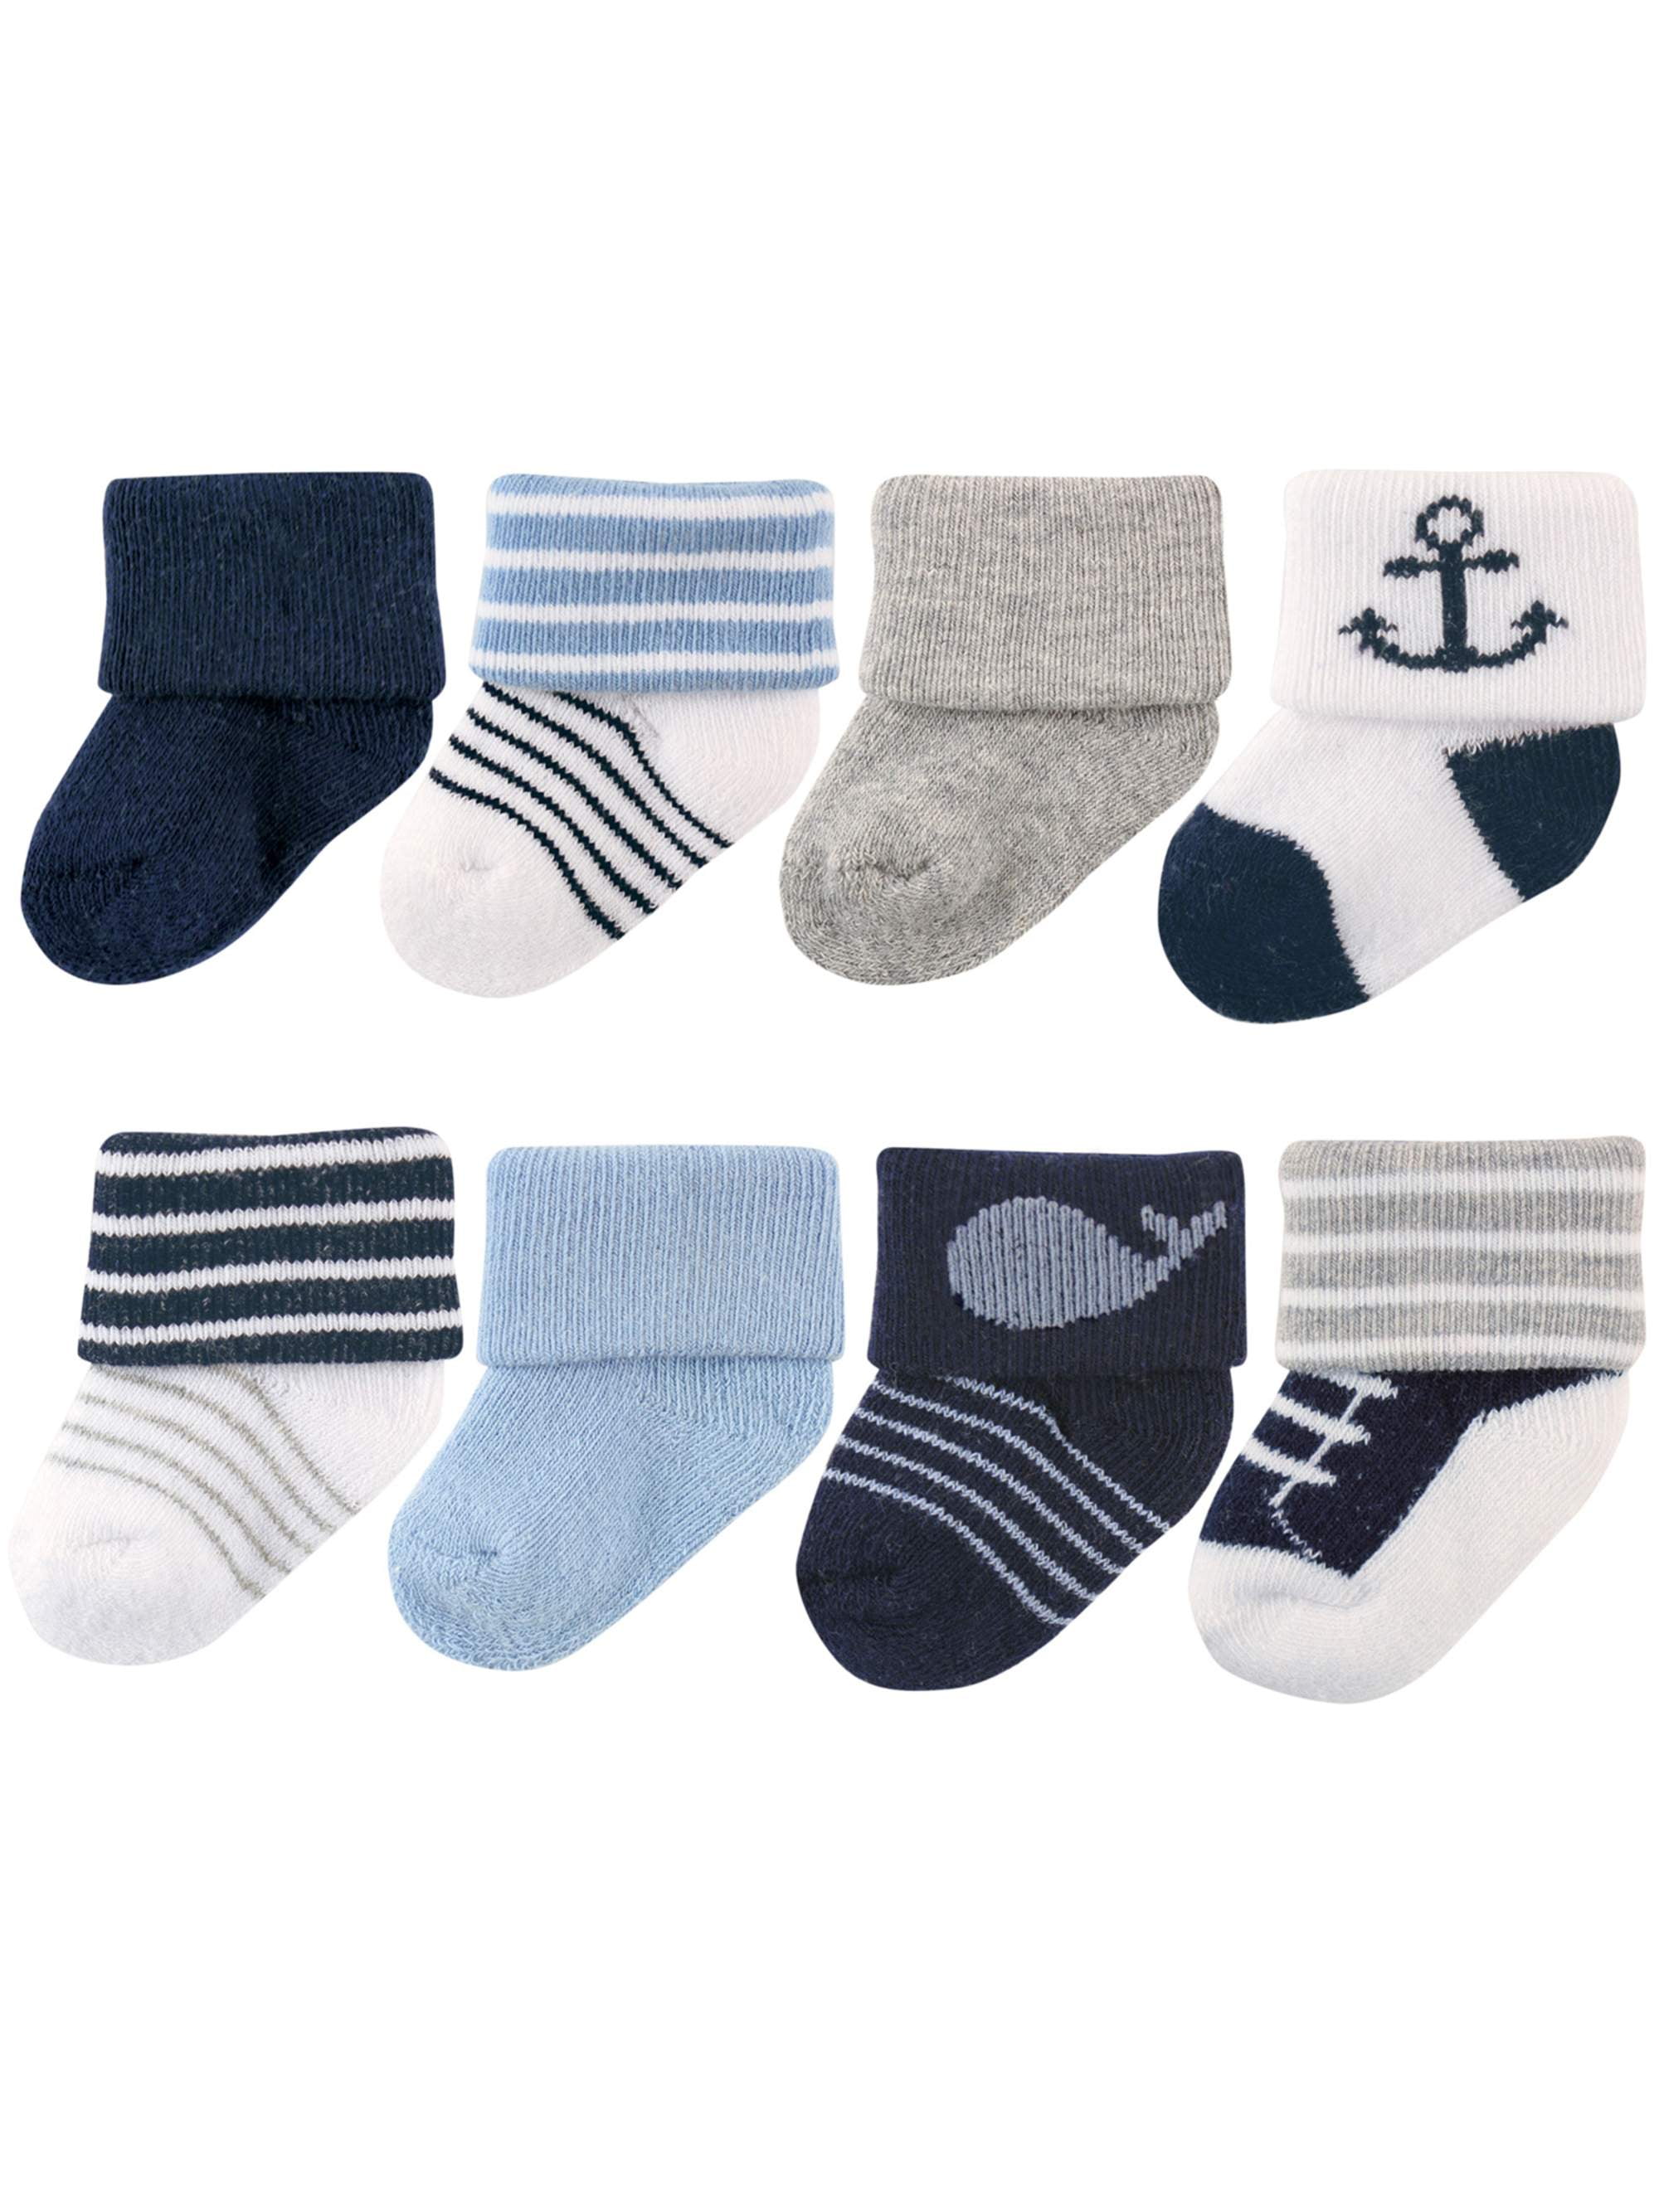 Luvable Friends - Socks, 8-pack (Baby Boys) - Walmart.com - Walmart.com